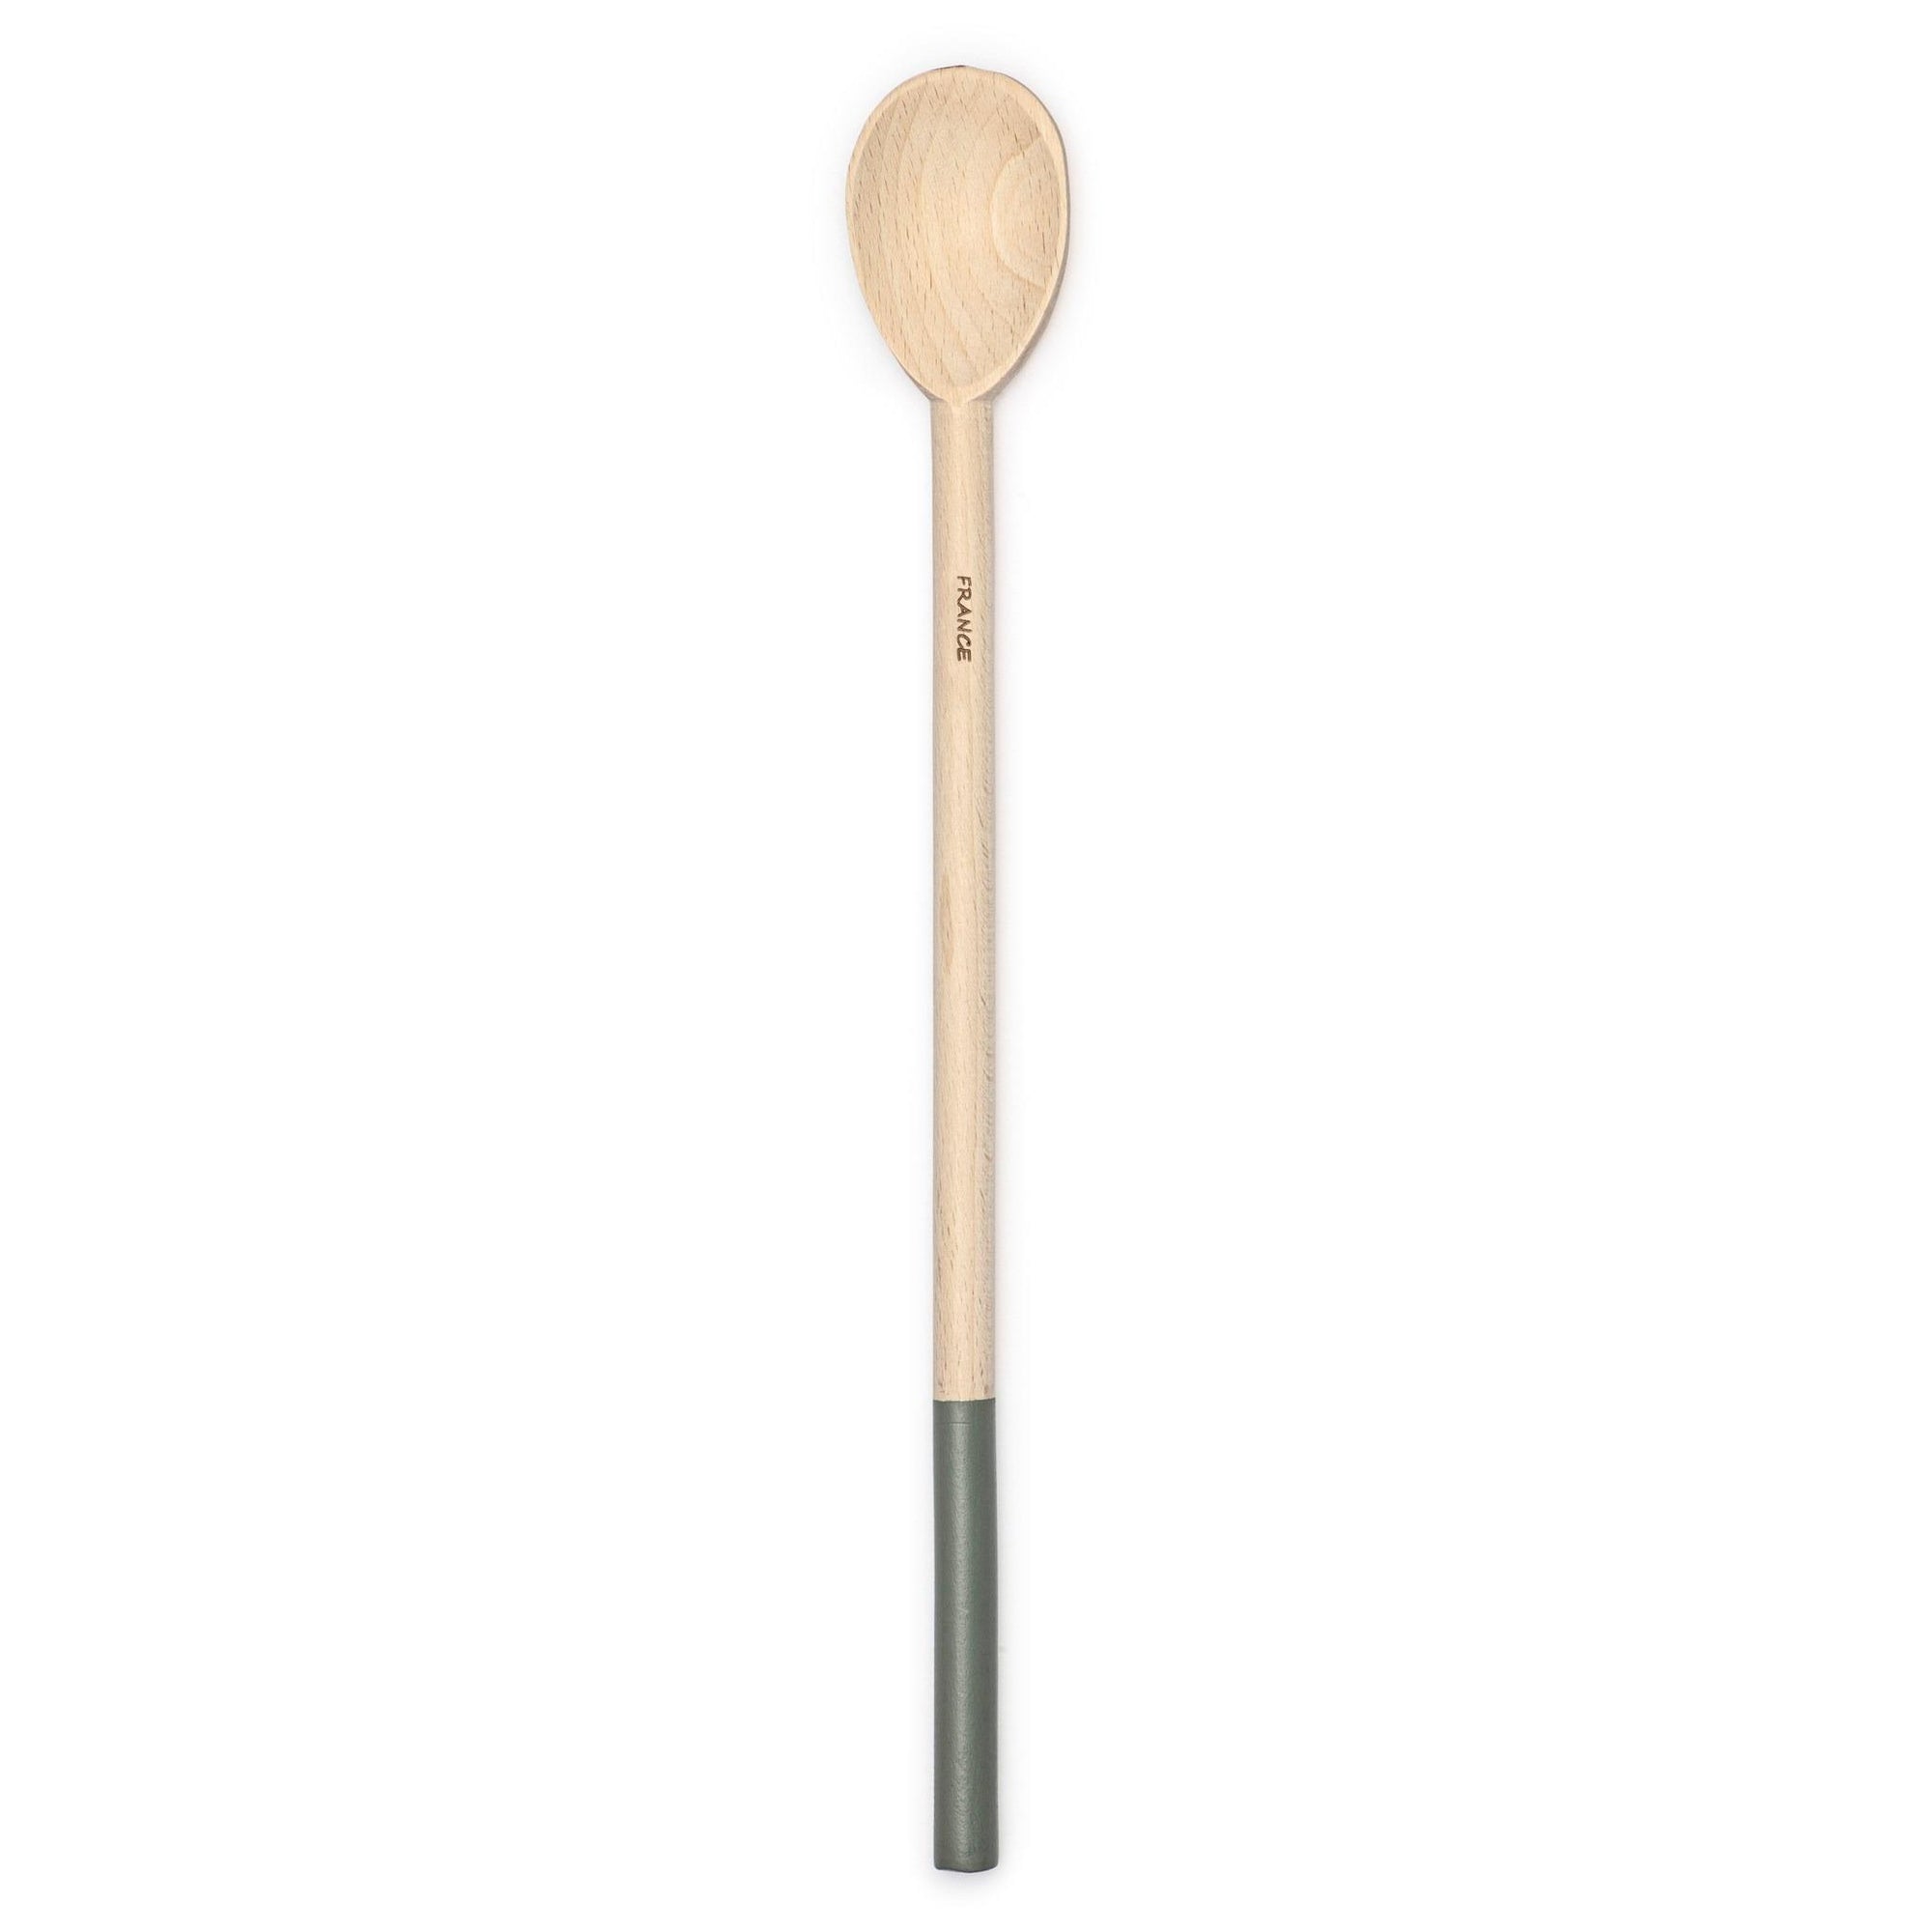 David Shaw Wood Cooking Spoon 16"